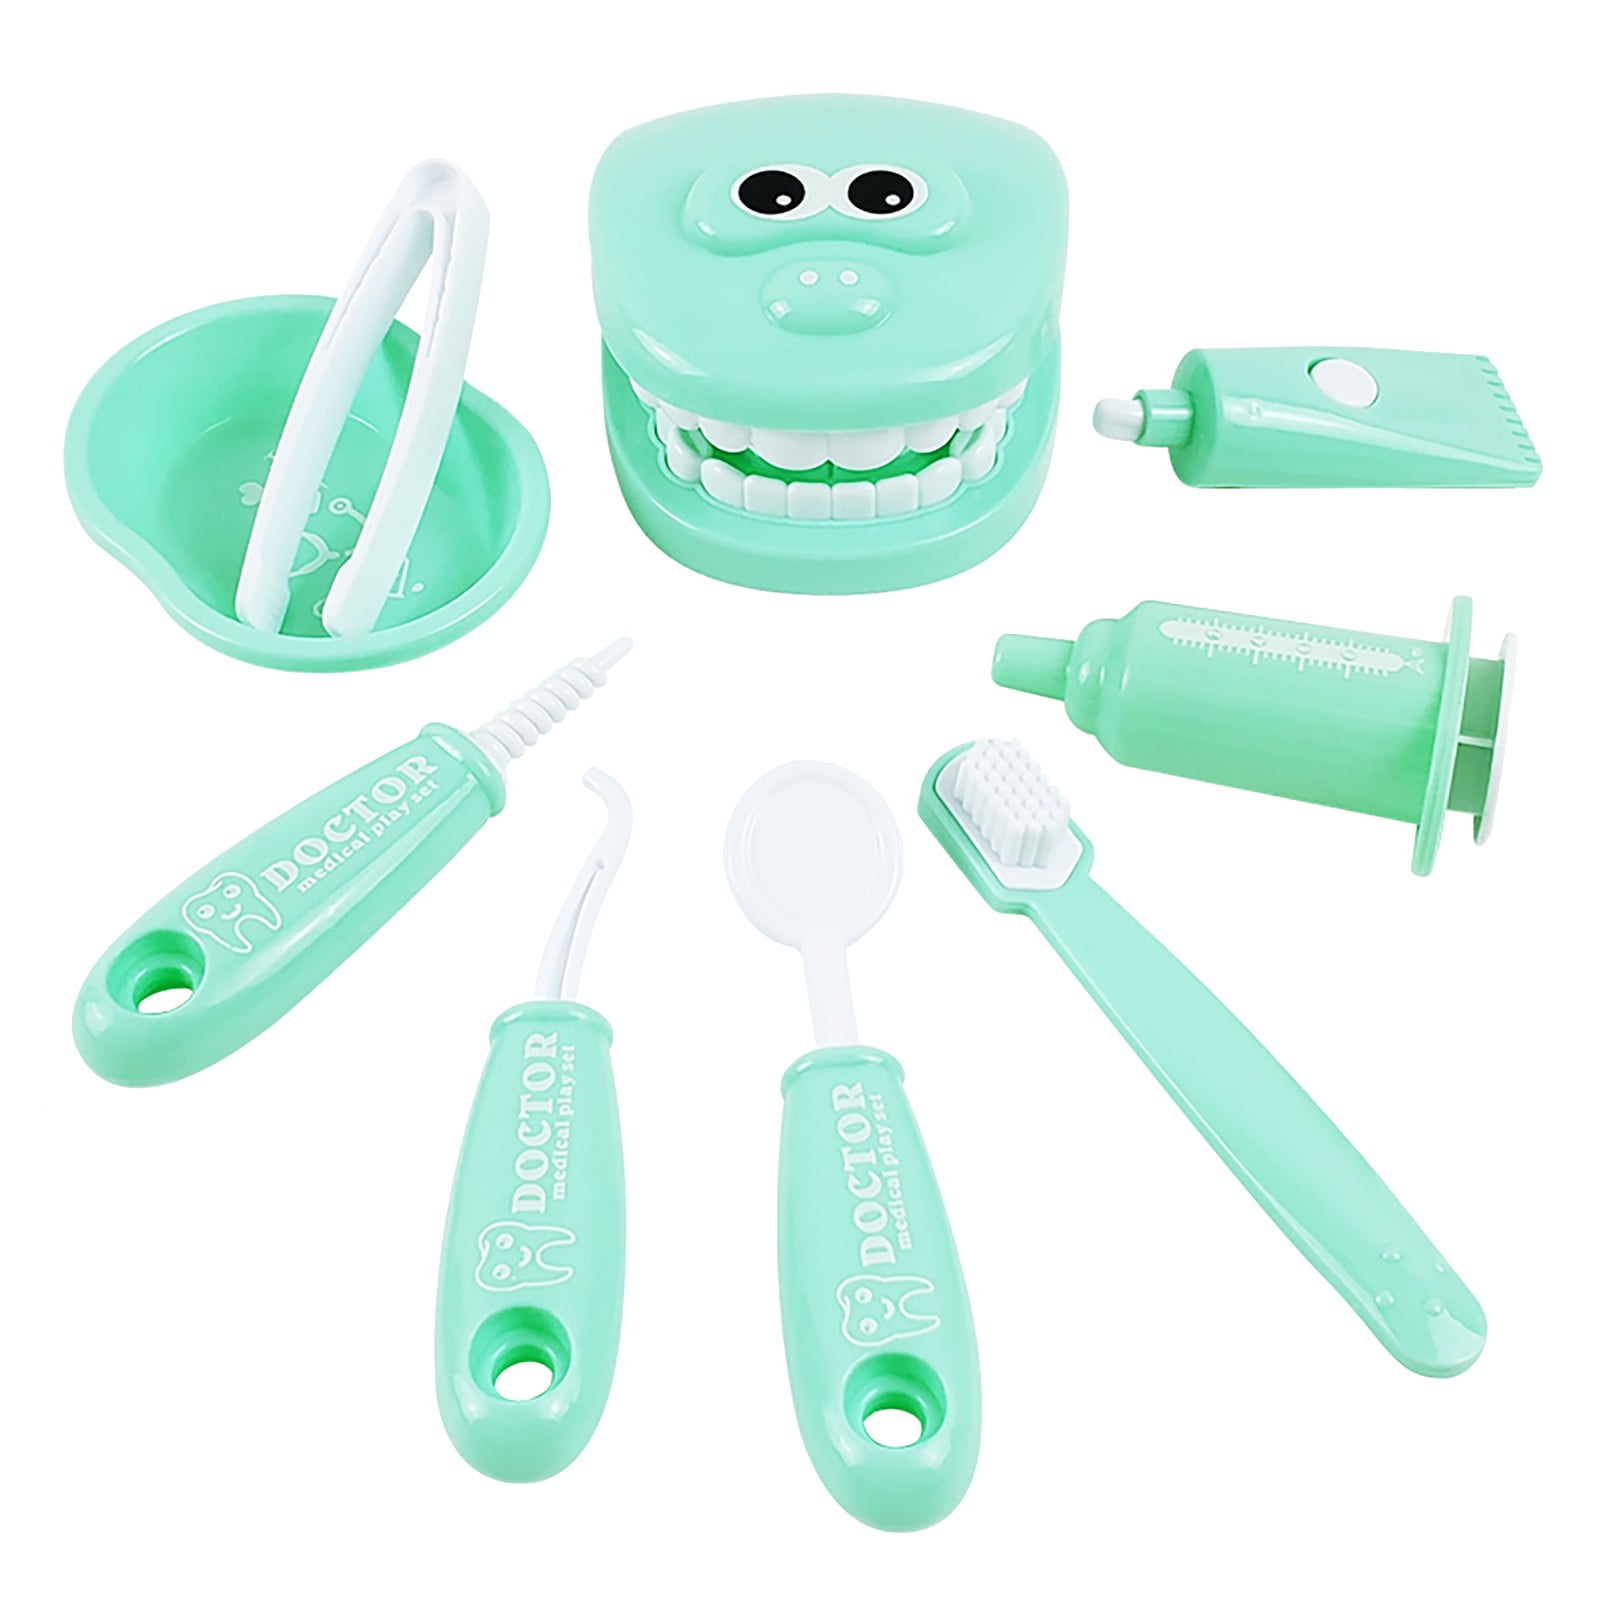 9PCS Kids Doctor Dentist Tool Kit Play Teeth Travel Toy for Boys Girls 